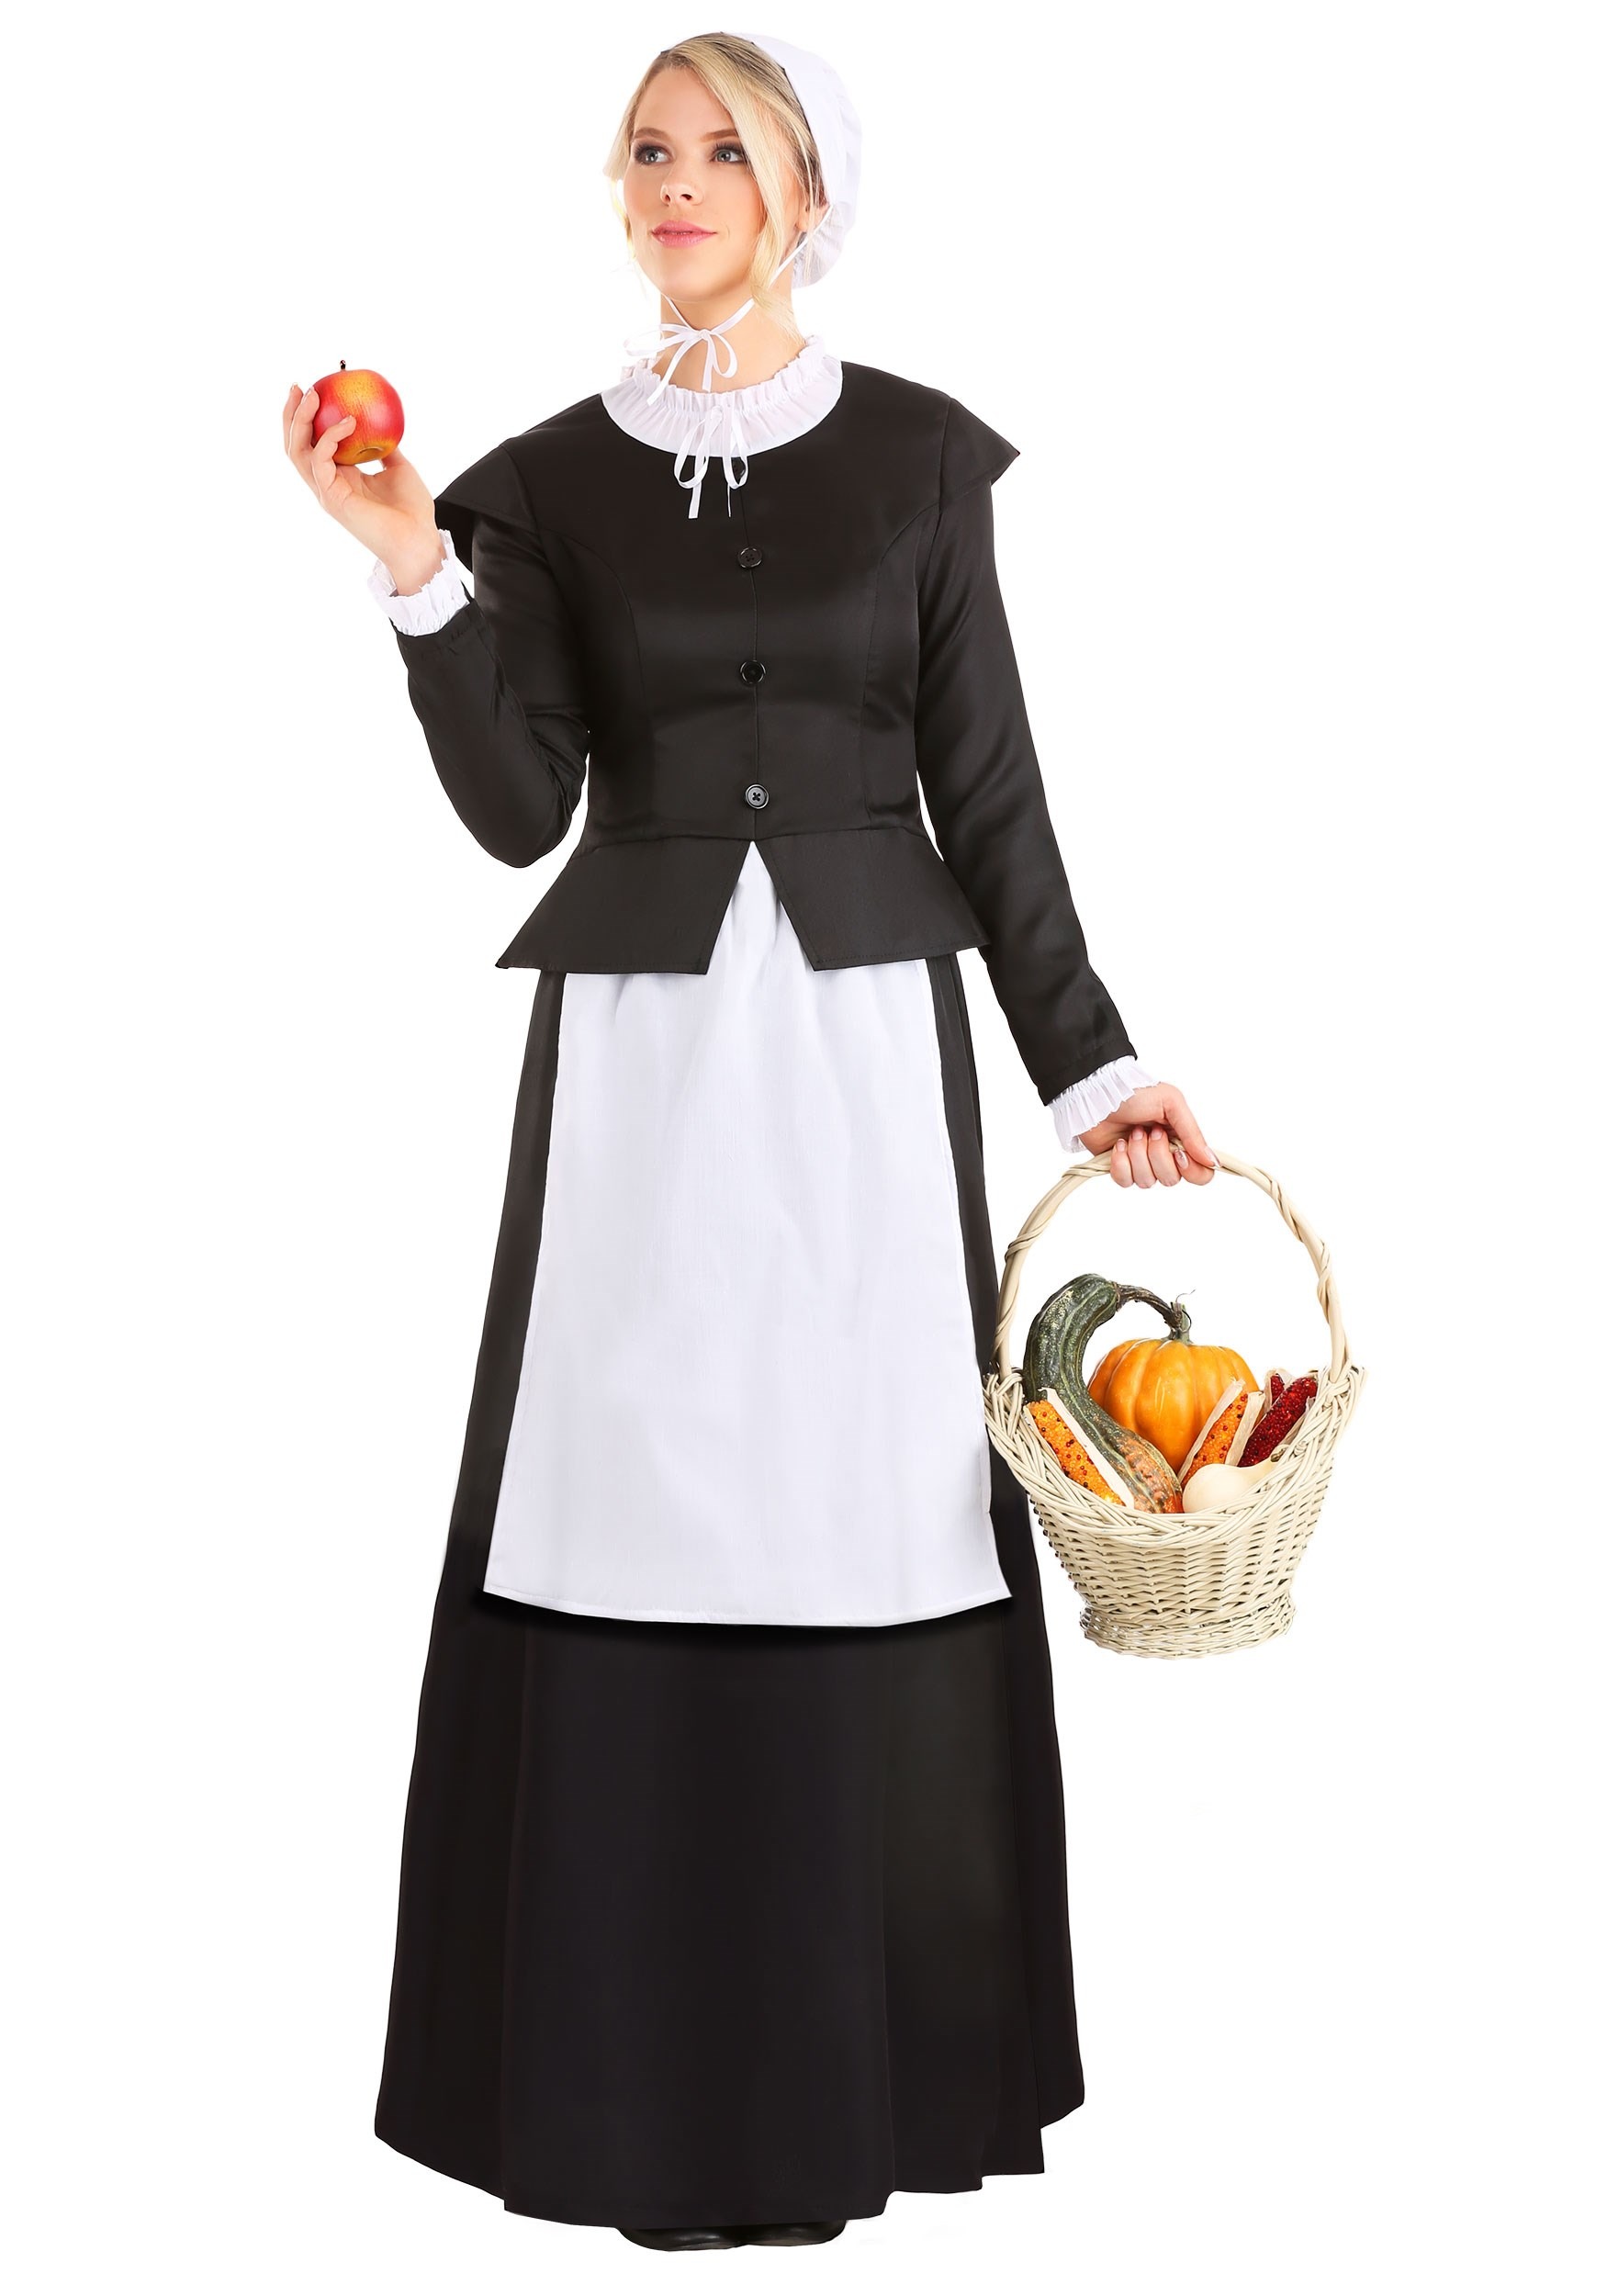 pilgrim outfit